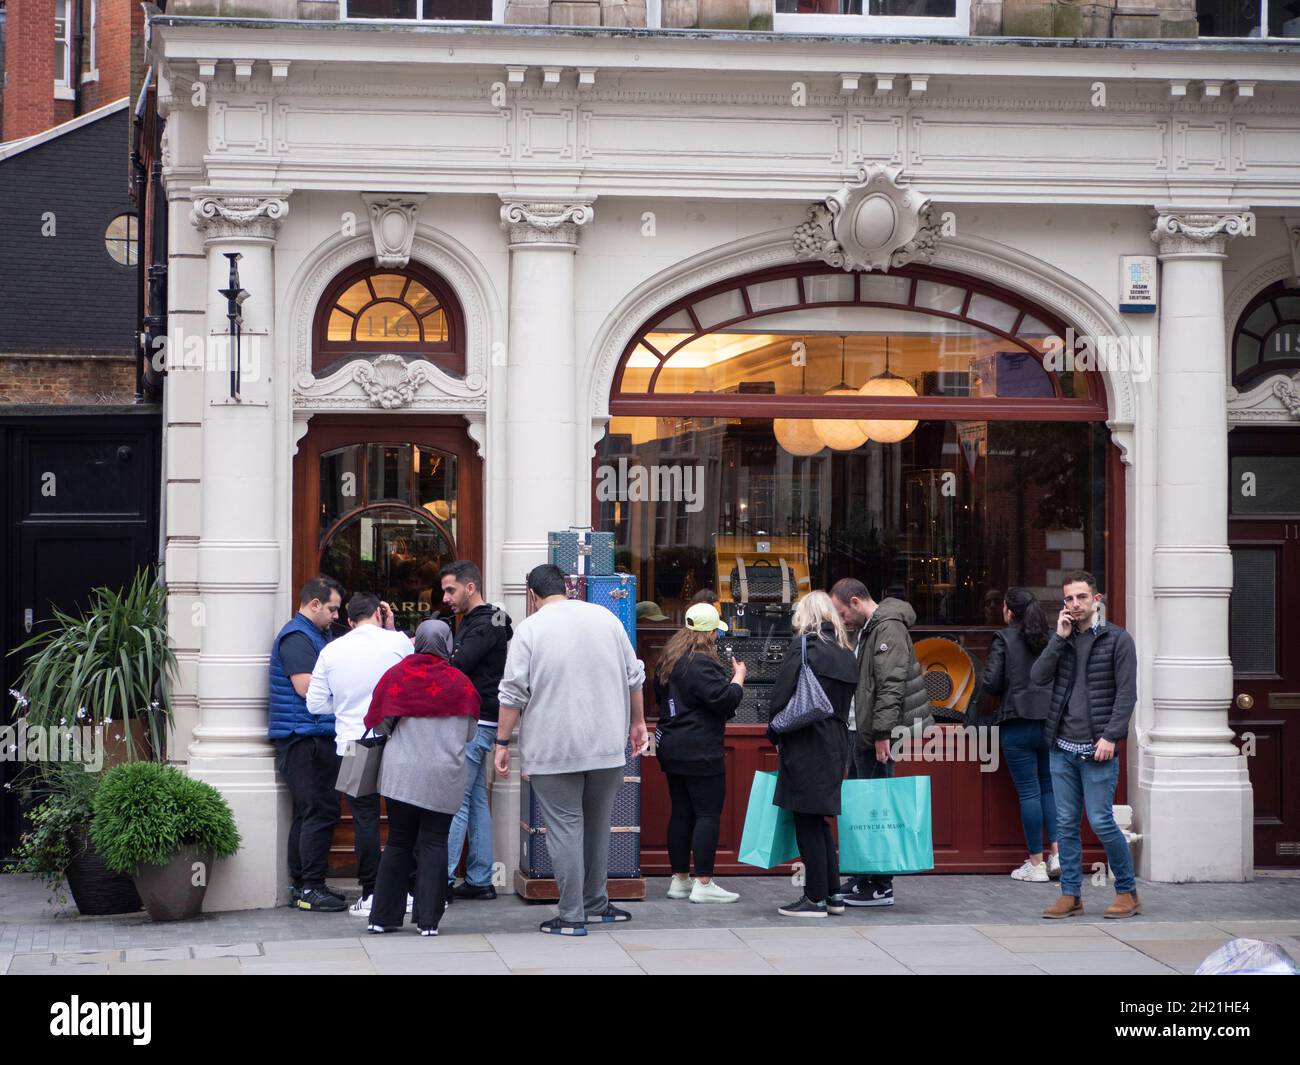 The Goyard shop in Carlos Place,London, such a beautiful building.